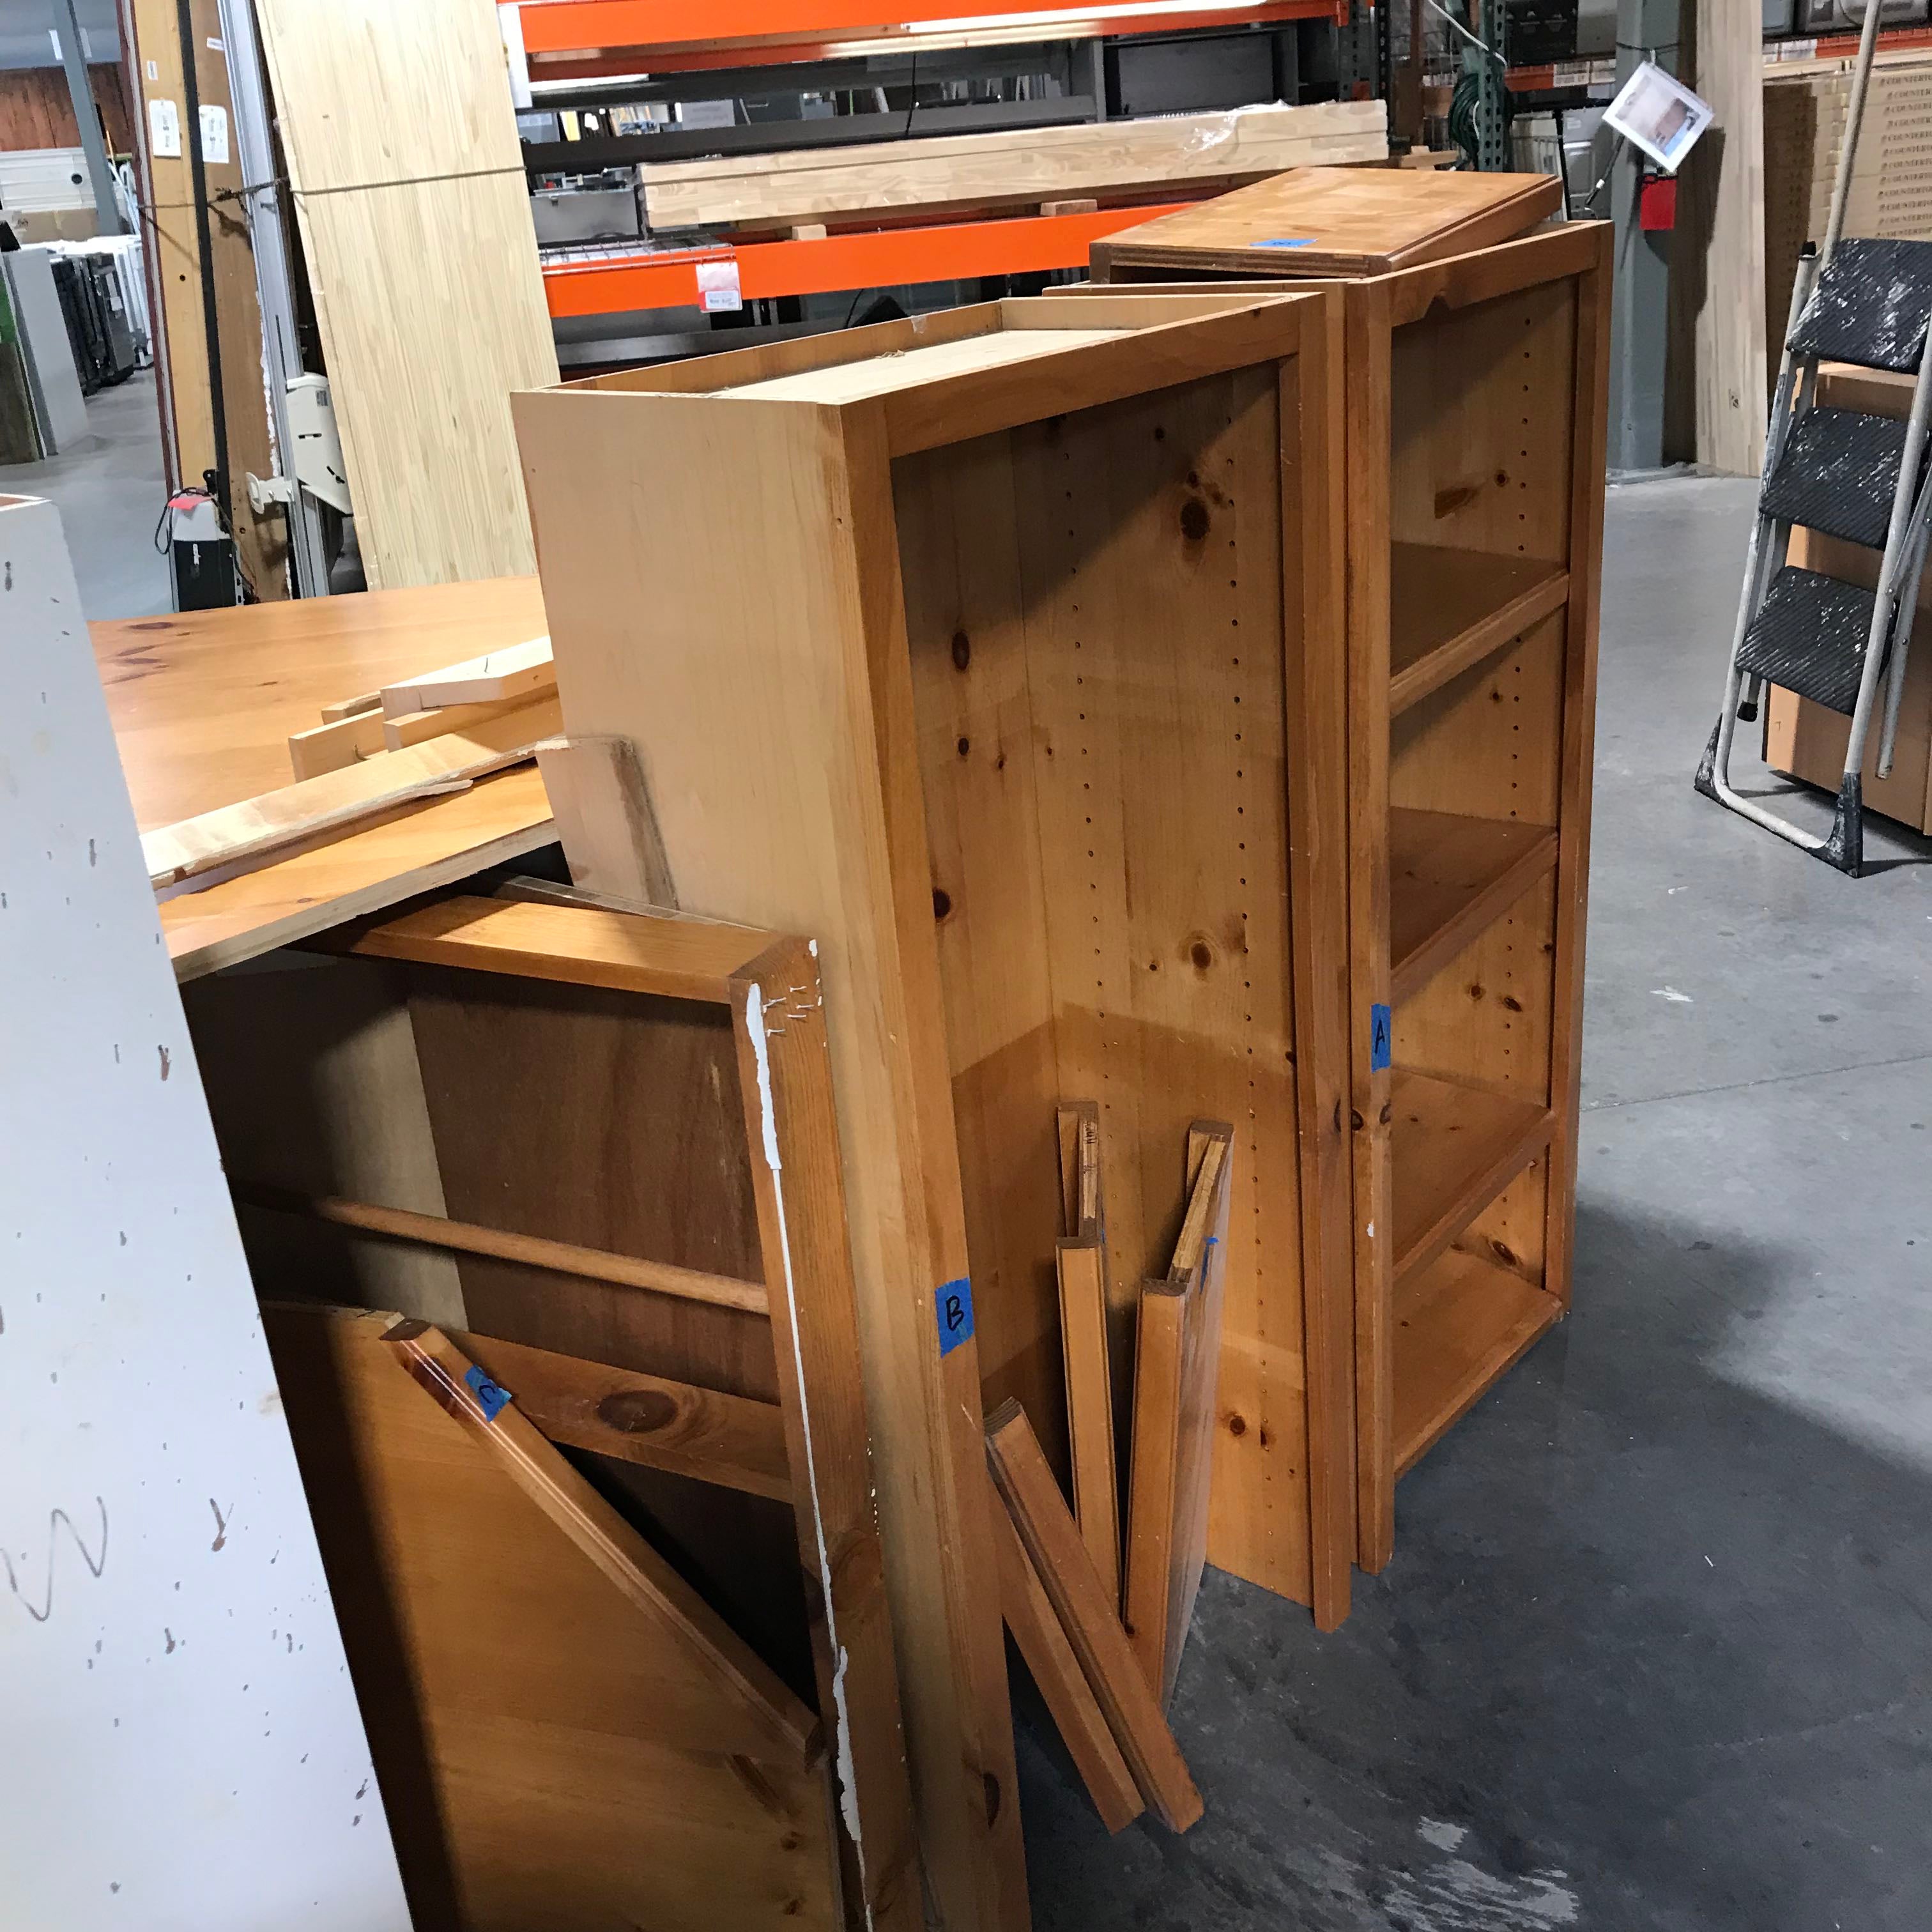 9 Piece Vintage Pine Wood Boxes Shelves Wood Cornwer Counter Top Cabinet Set